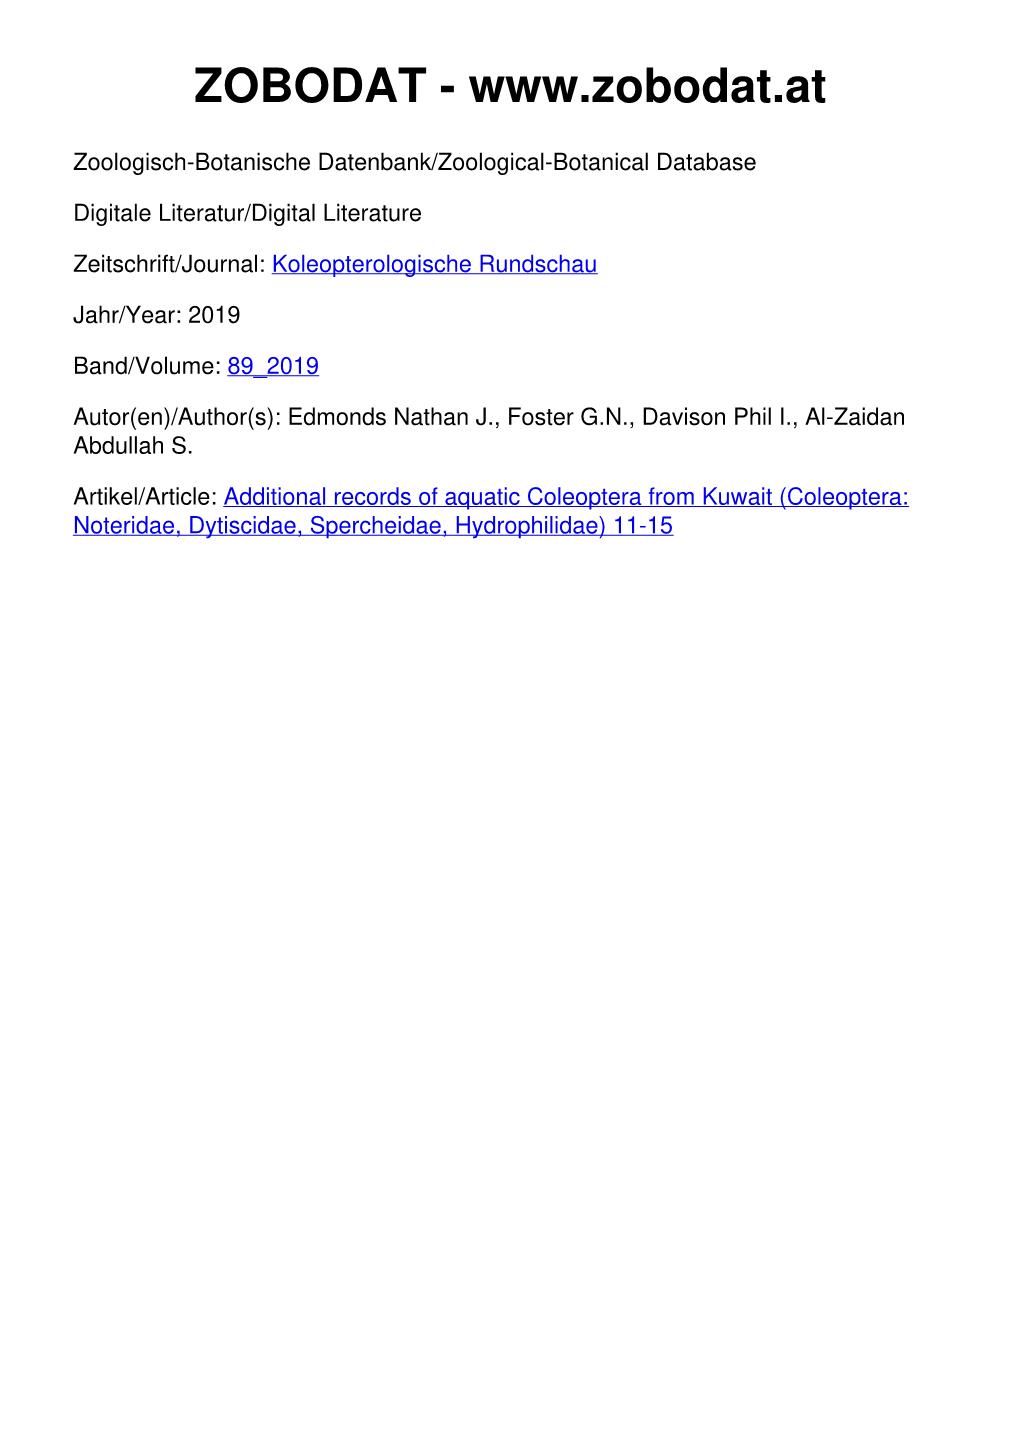 Additional Records of Aquatic Coleoptera from Kuwait (Coleoptera: Noteridae, Dytiscidae, Spercheidae, Hydrophilidae) 11-15 10 Koleopt